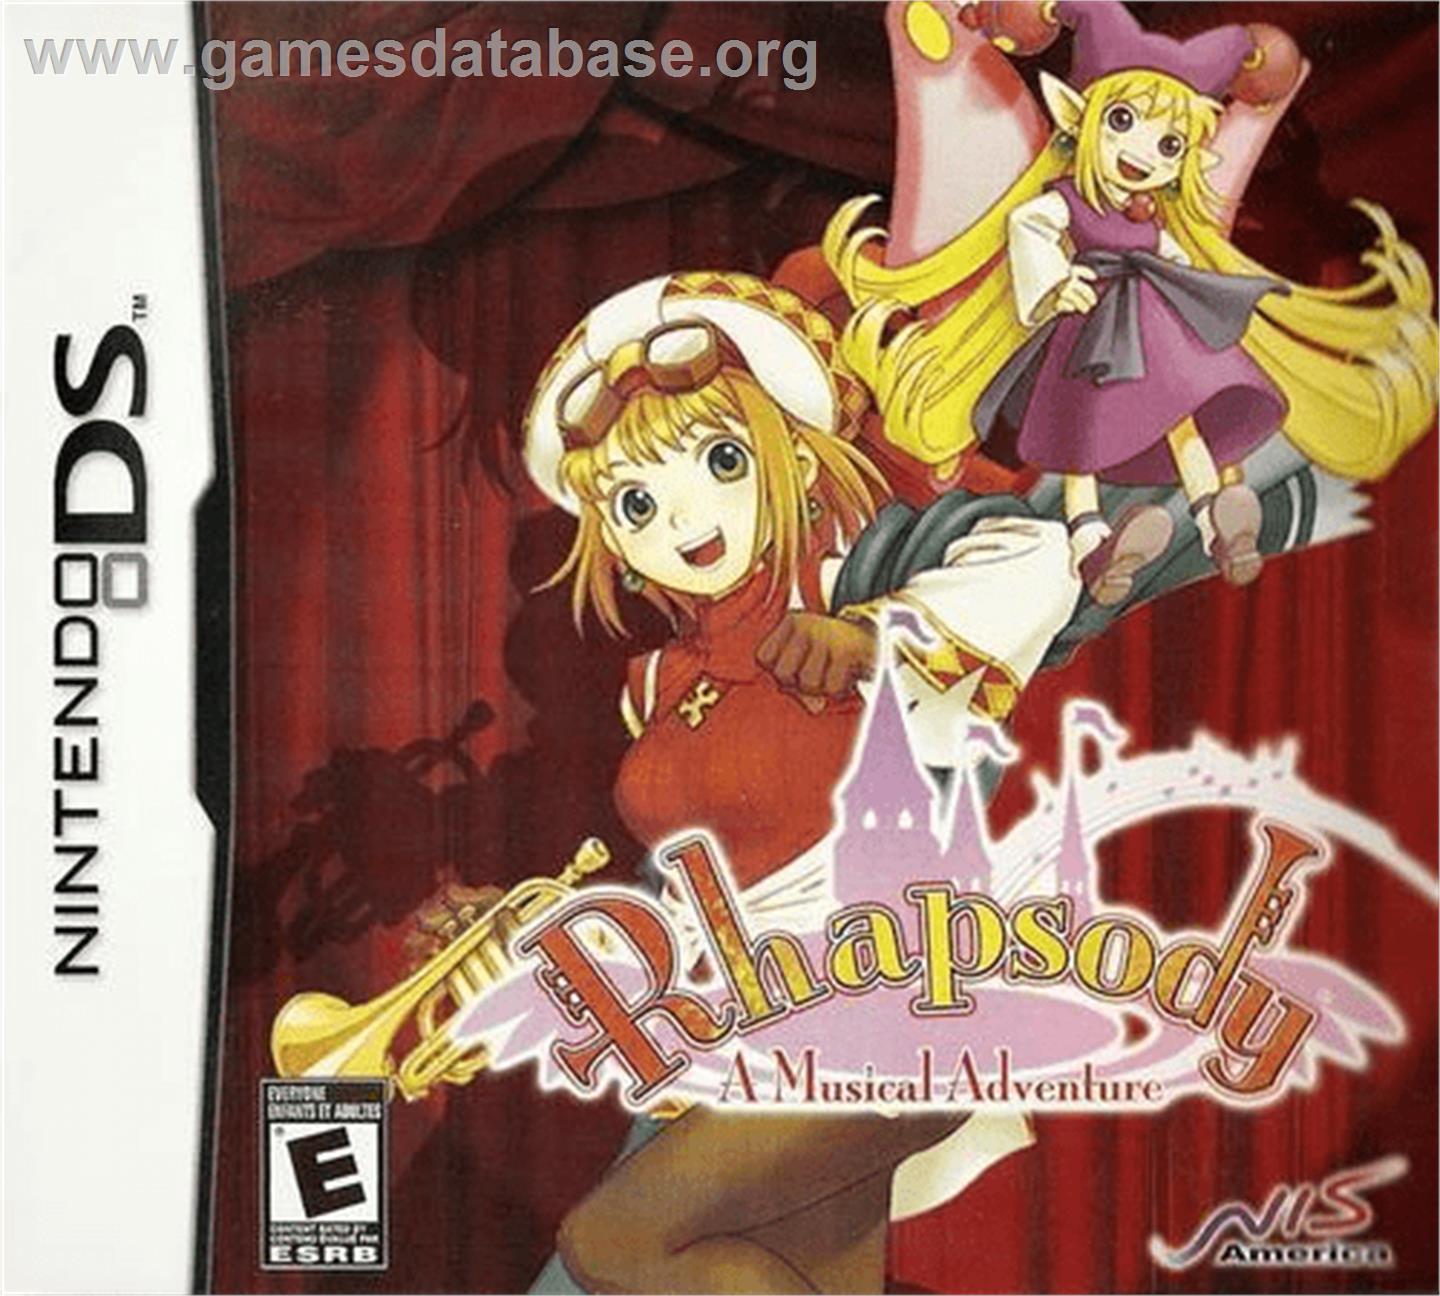 Rhapsody: A Musical Adventure - Nintendo DS - Artwork - Box